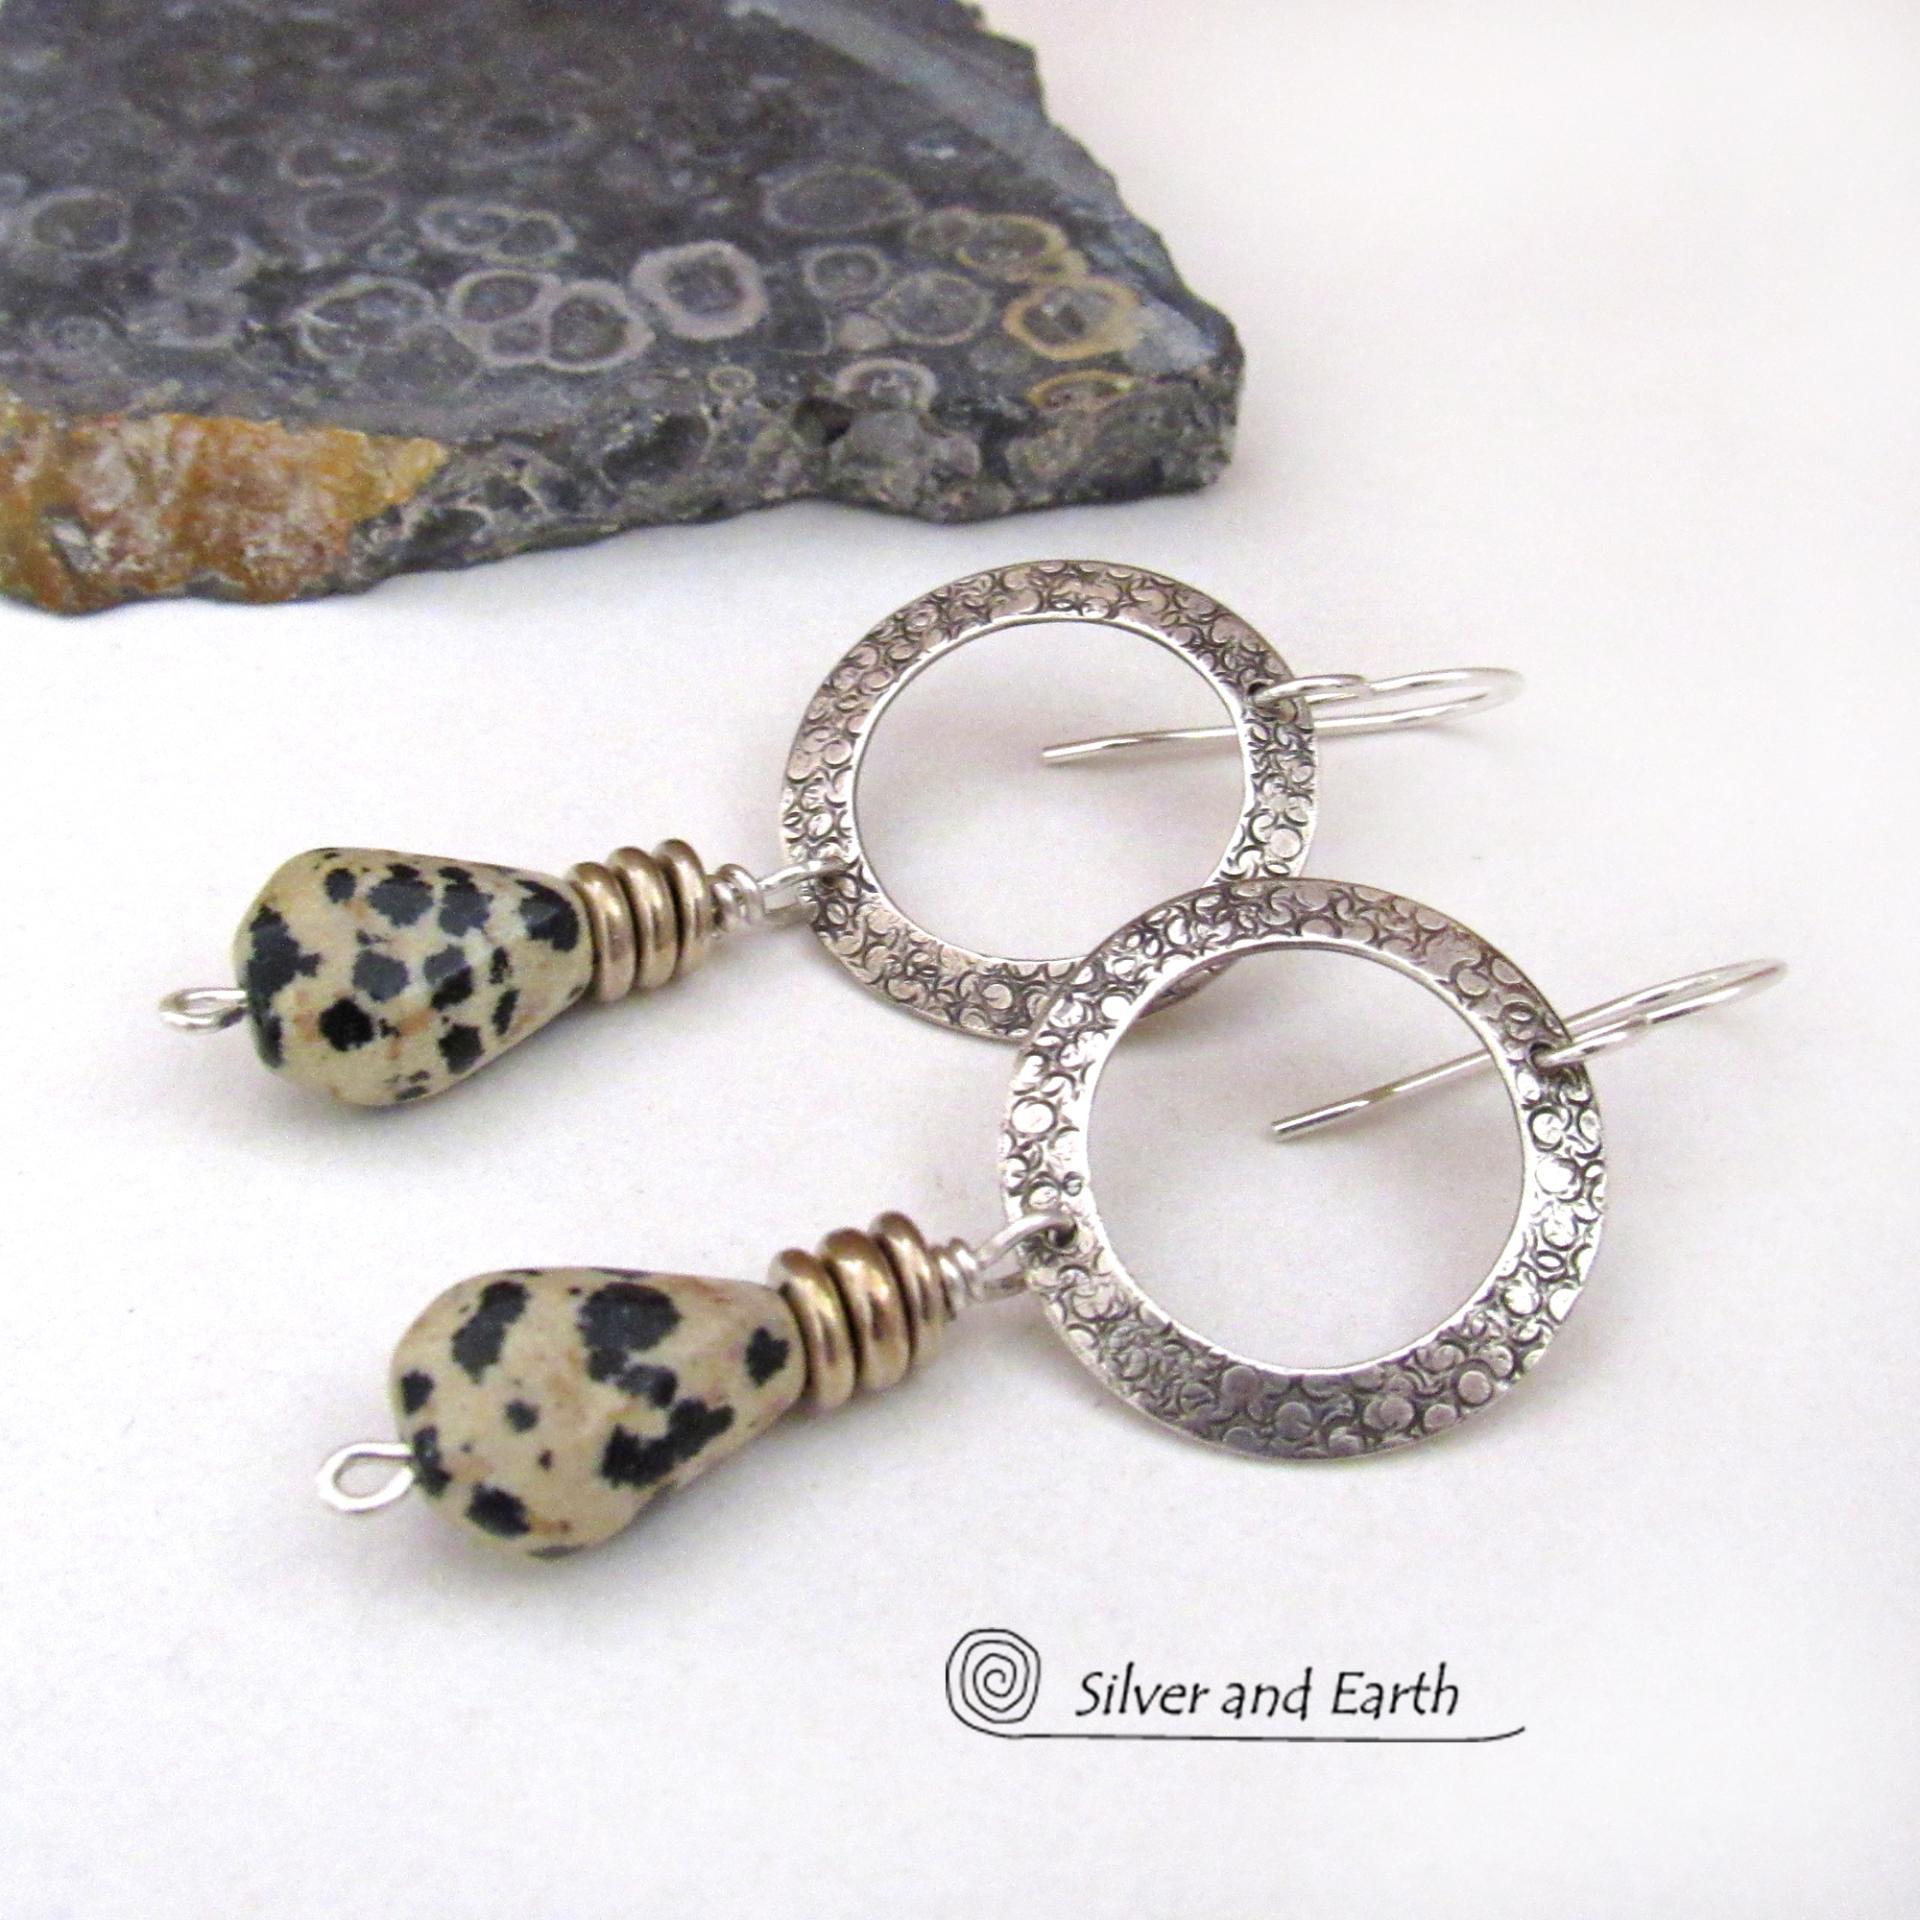 Sterling Silver Circle Hoop Earrings with Dalmatian Jasper Stones - Earthy Natural Gemstone Jewelry